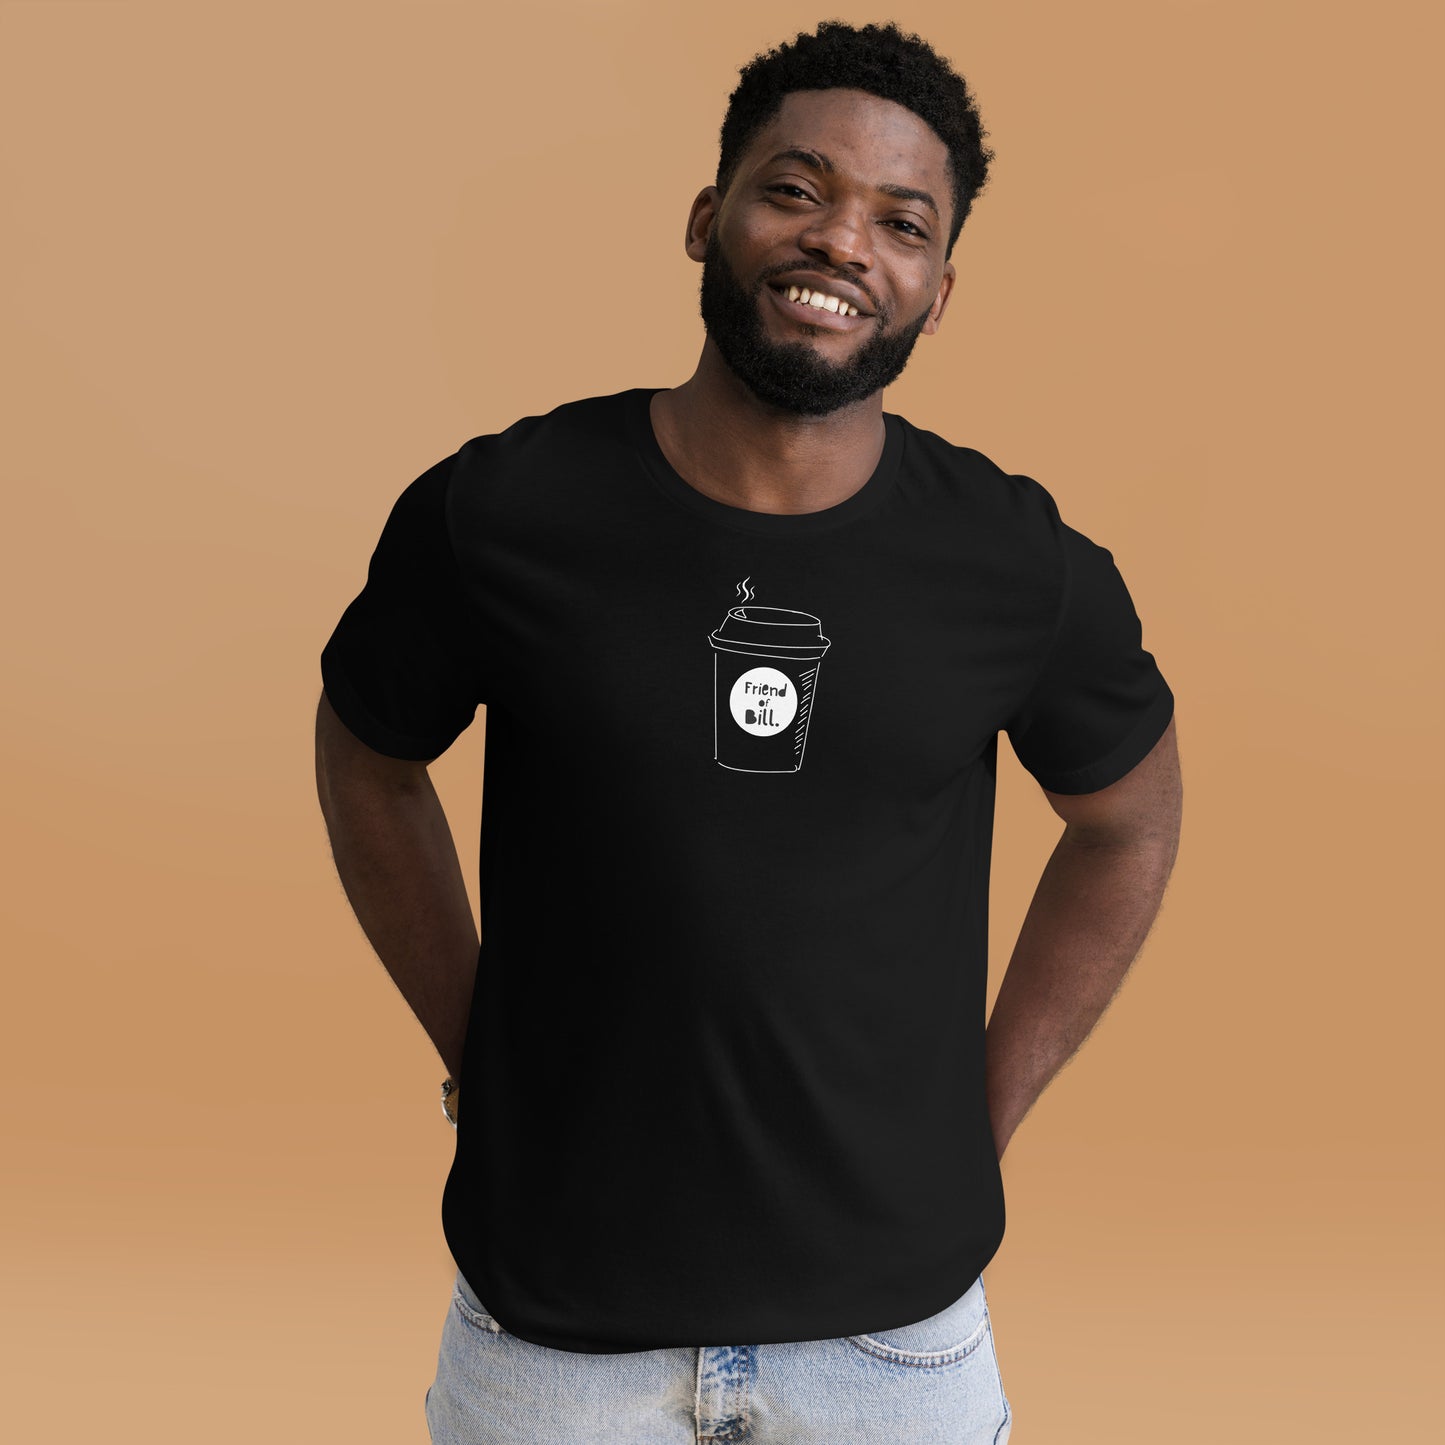 Friend of Bill - Unisex t-shirt